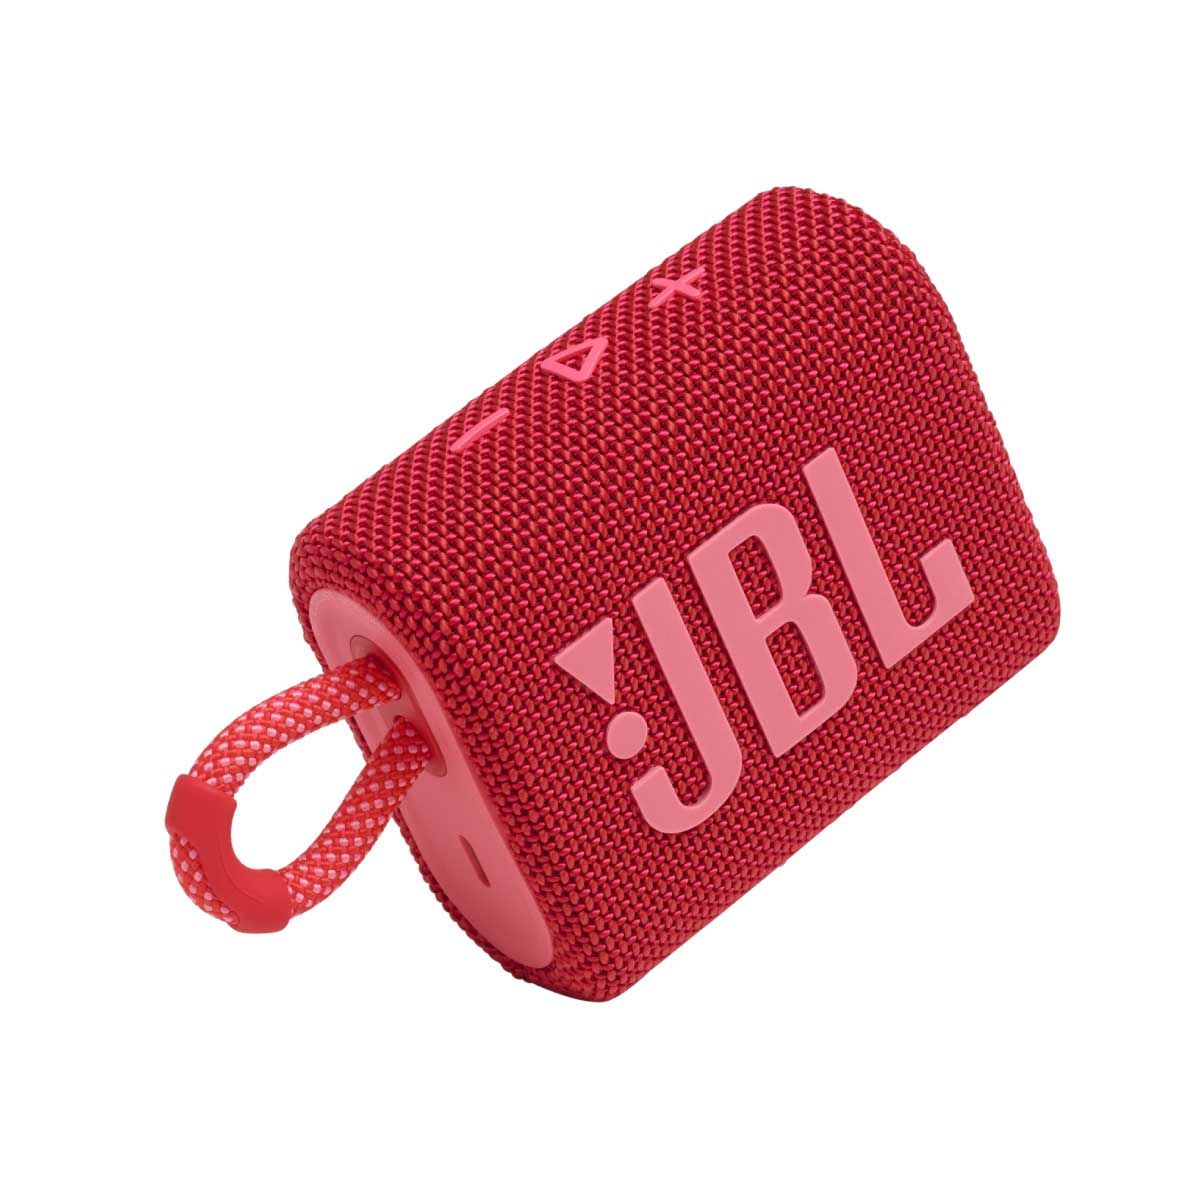 JBL ลำโพงพกพาบลูทูธ รุ่น GO3/RD สีแดง กันน้ำ/กันฝุ่น